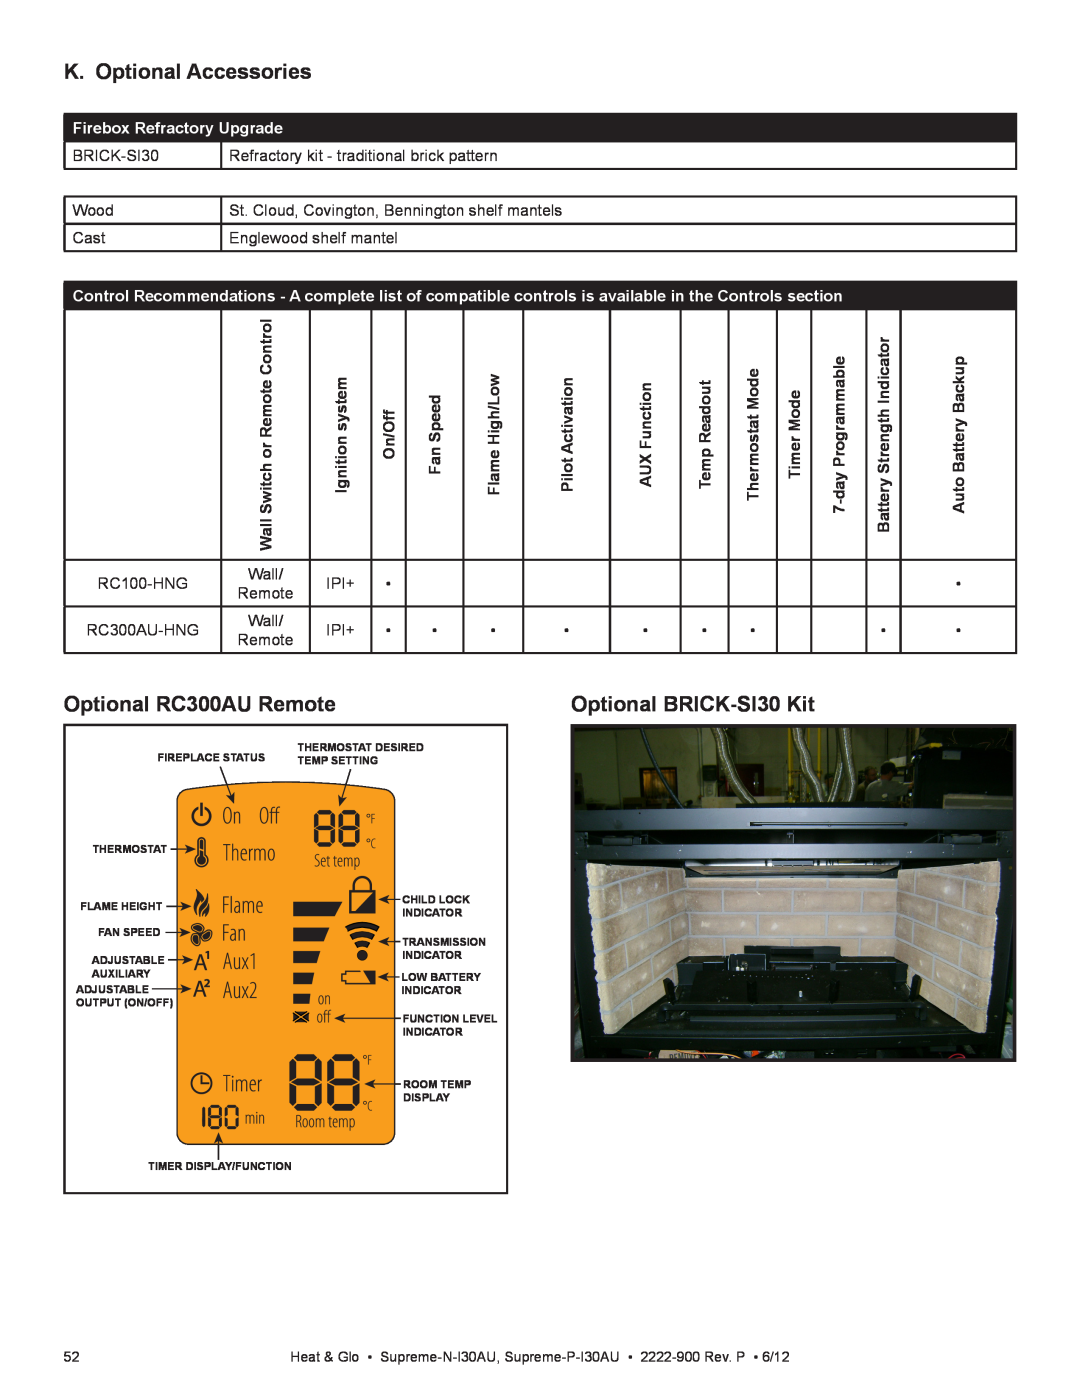 Heat & Glo LifeStyle SUPREME-P-I30AU owner manual K. Optional Accessories, Optional RC300AU Remote, Optional BRICK-SI30 Kit 